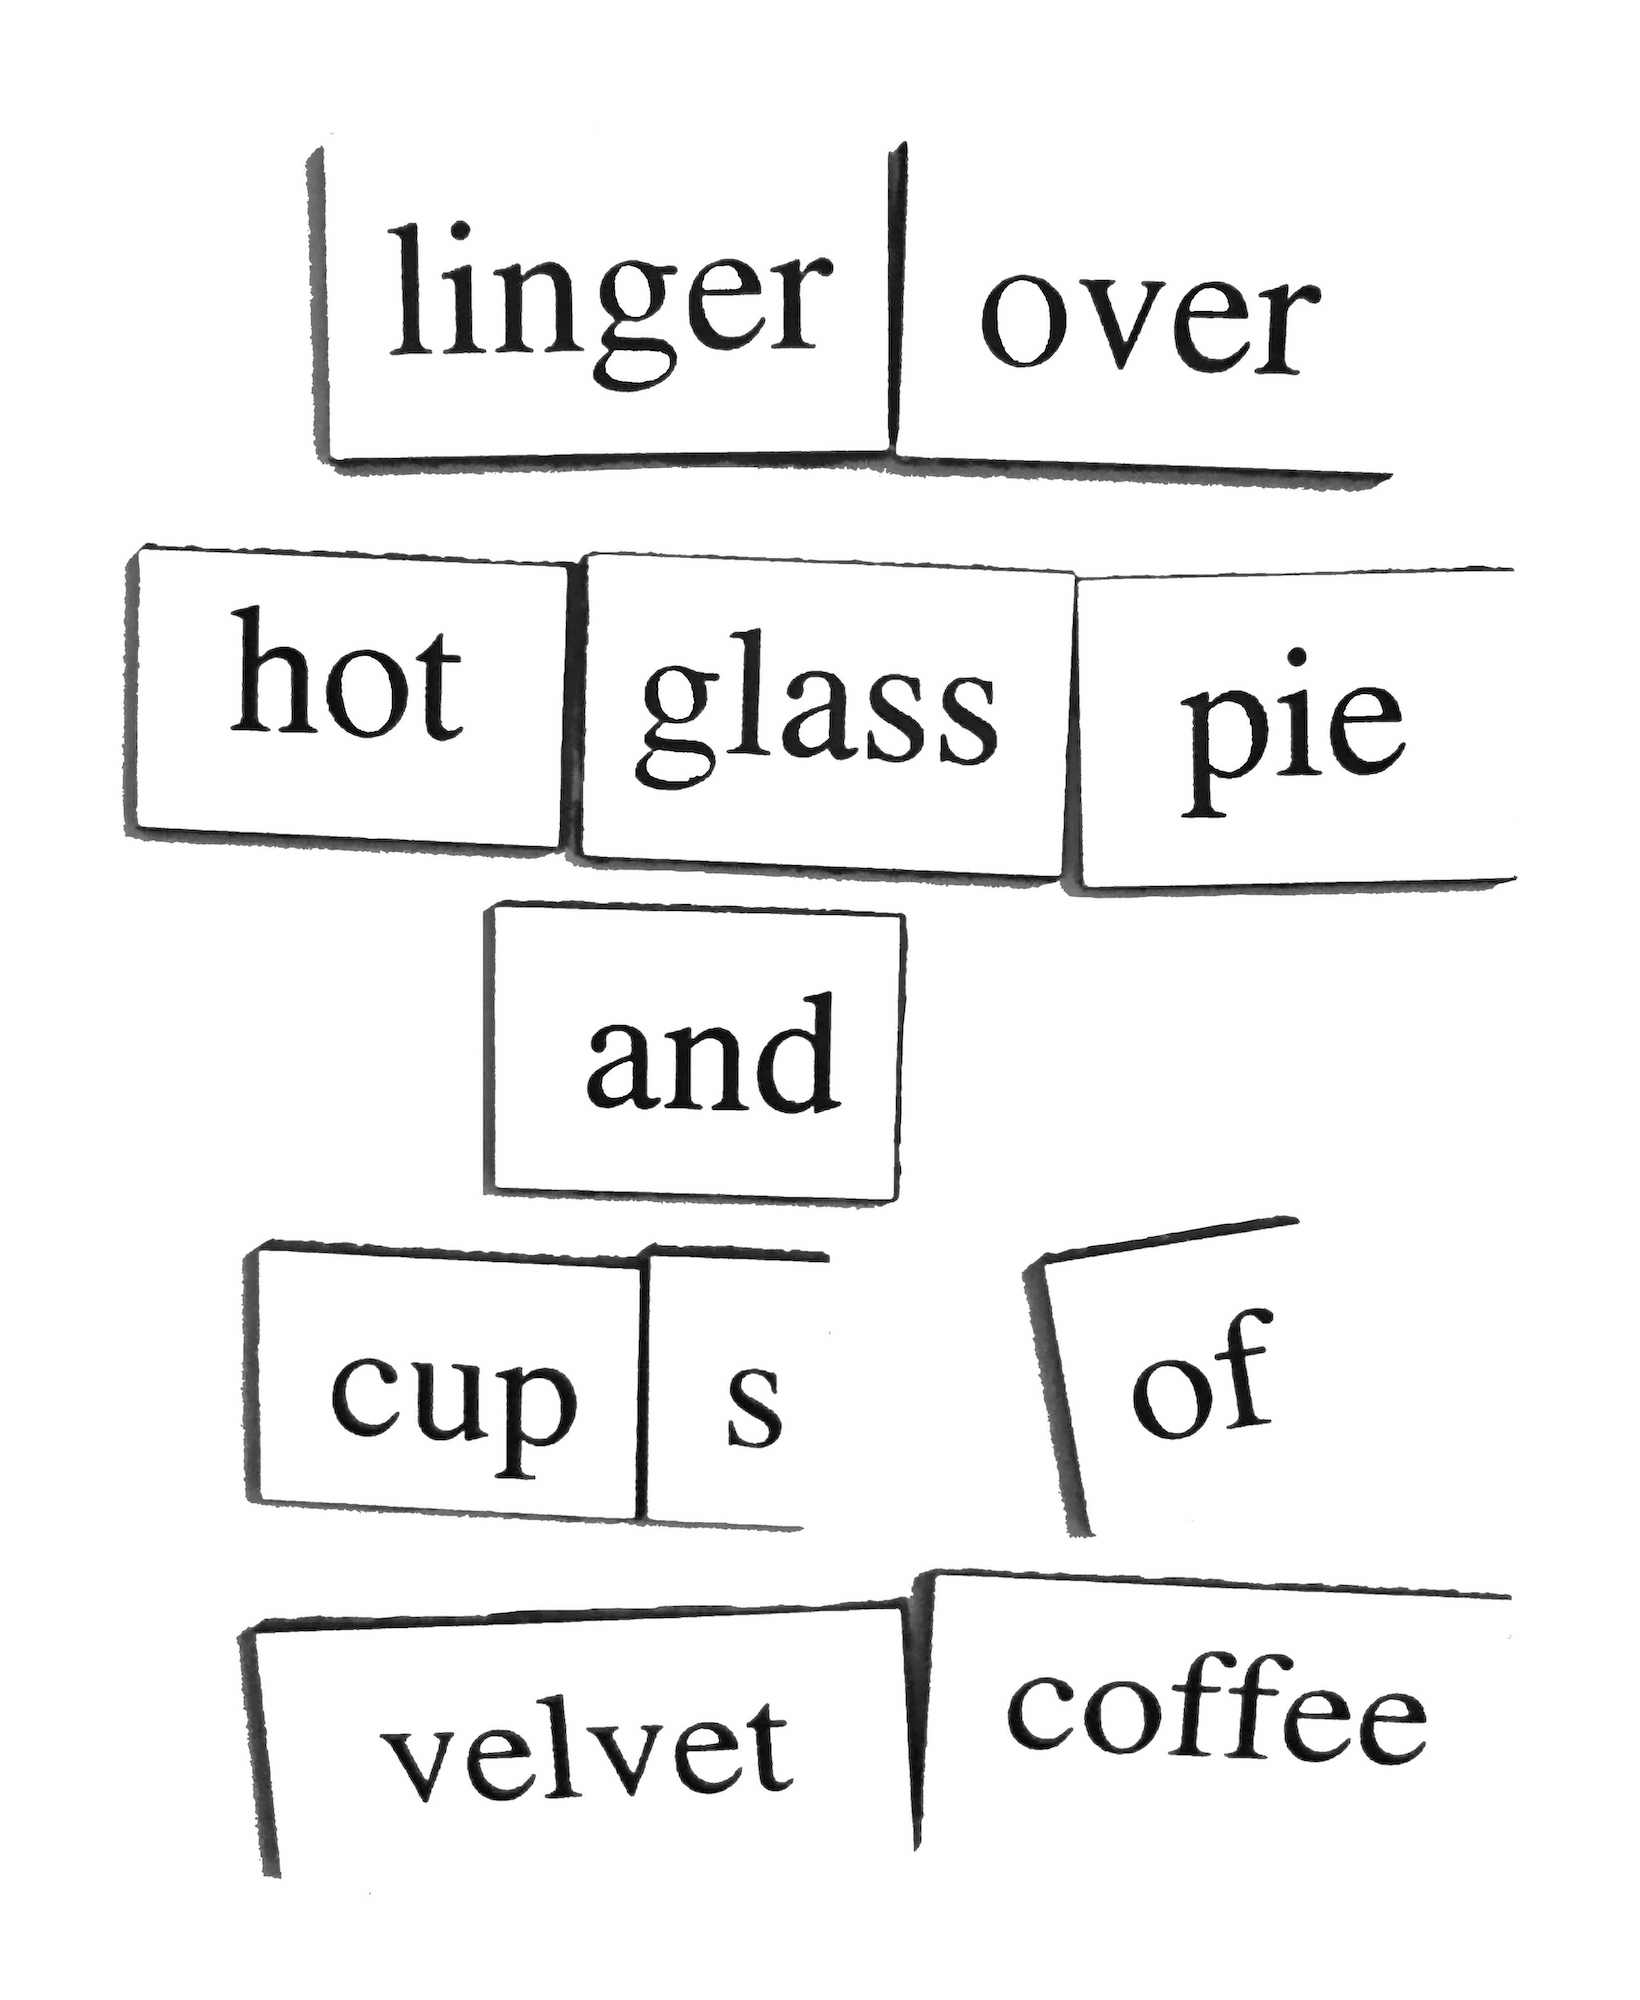 art every day number 691 fridge magnets poetry hot glass pie velvet coffee